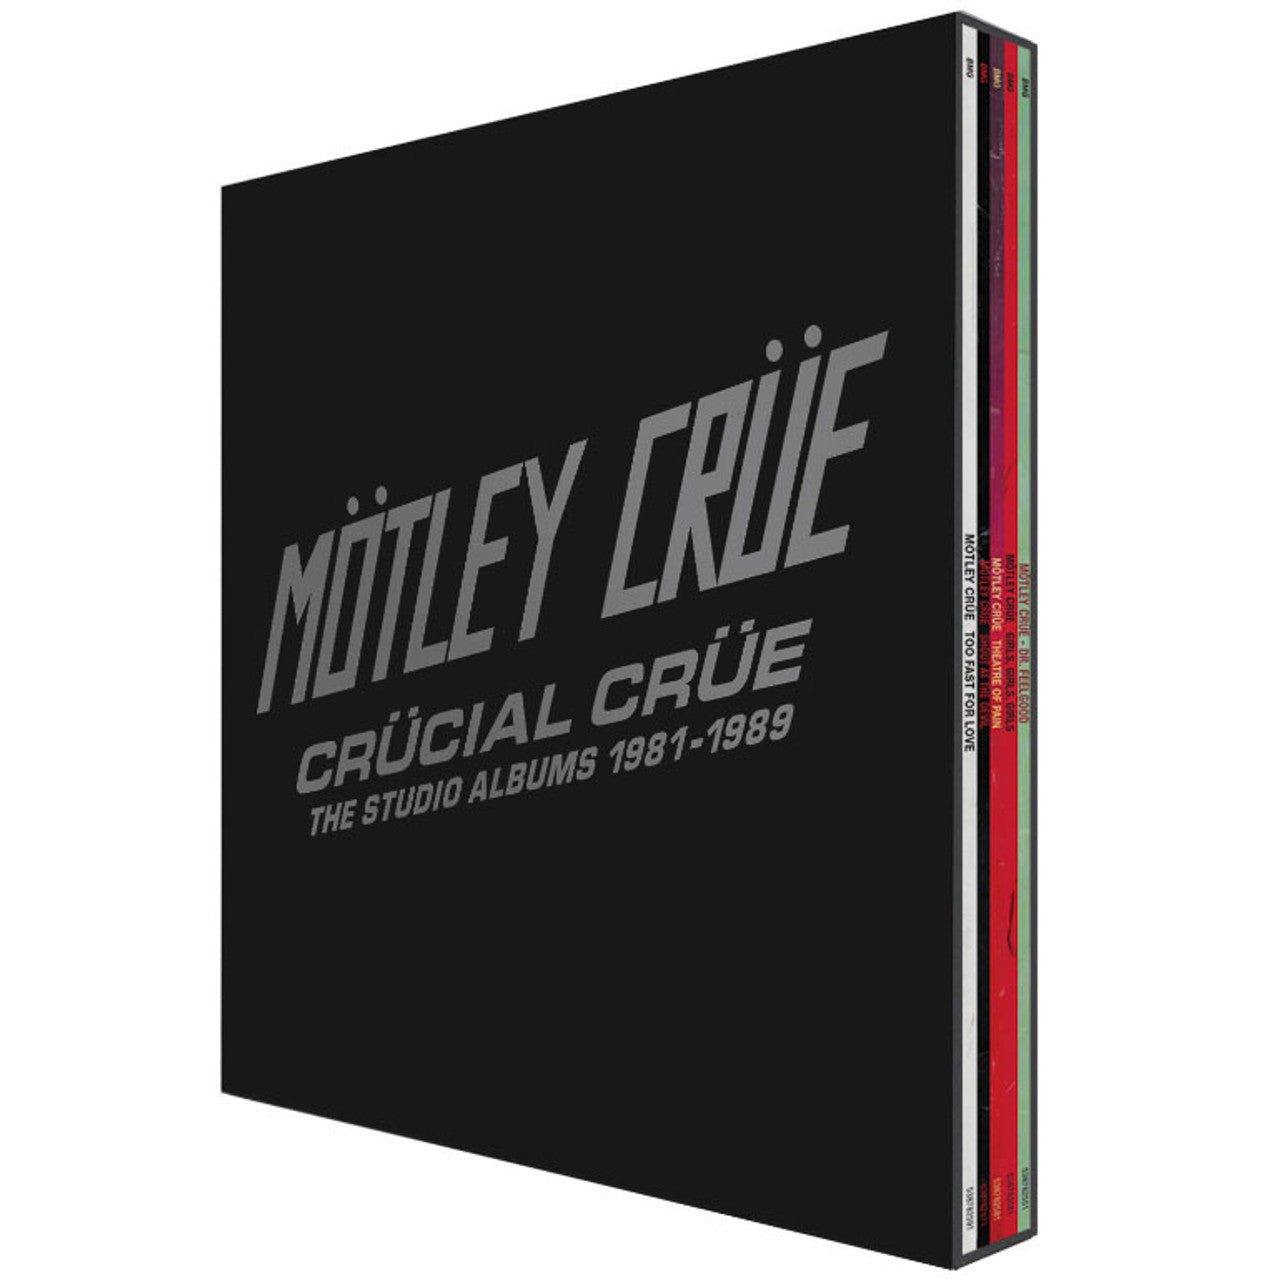 Order Mötley Crüe - Crucial Crue: The Studio Albums 1981-1989 (Limited Edition 5LP Box Set, Colored Vinyl)